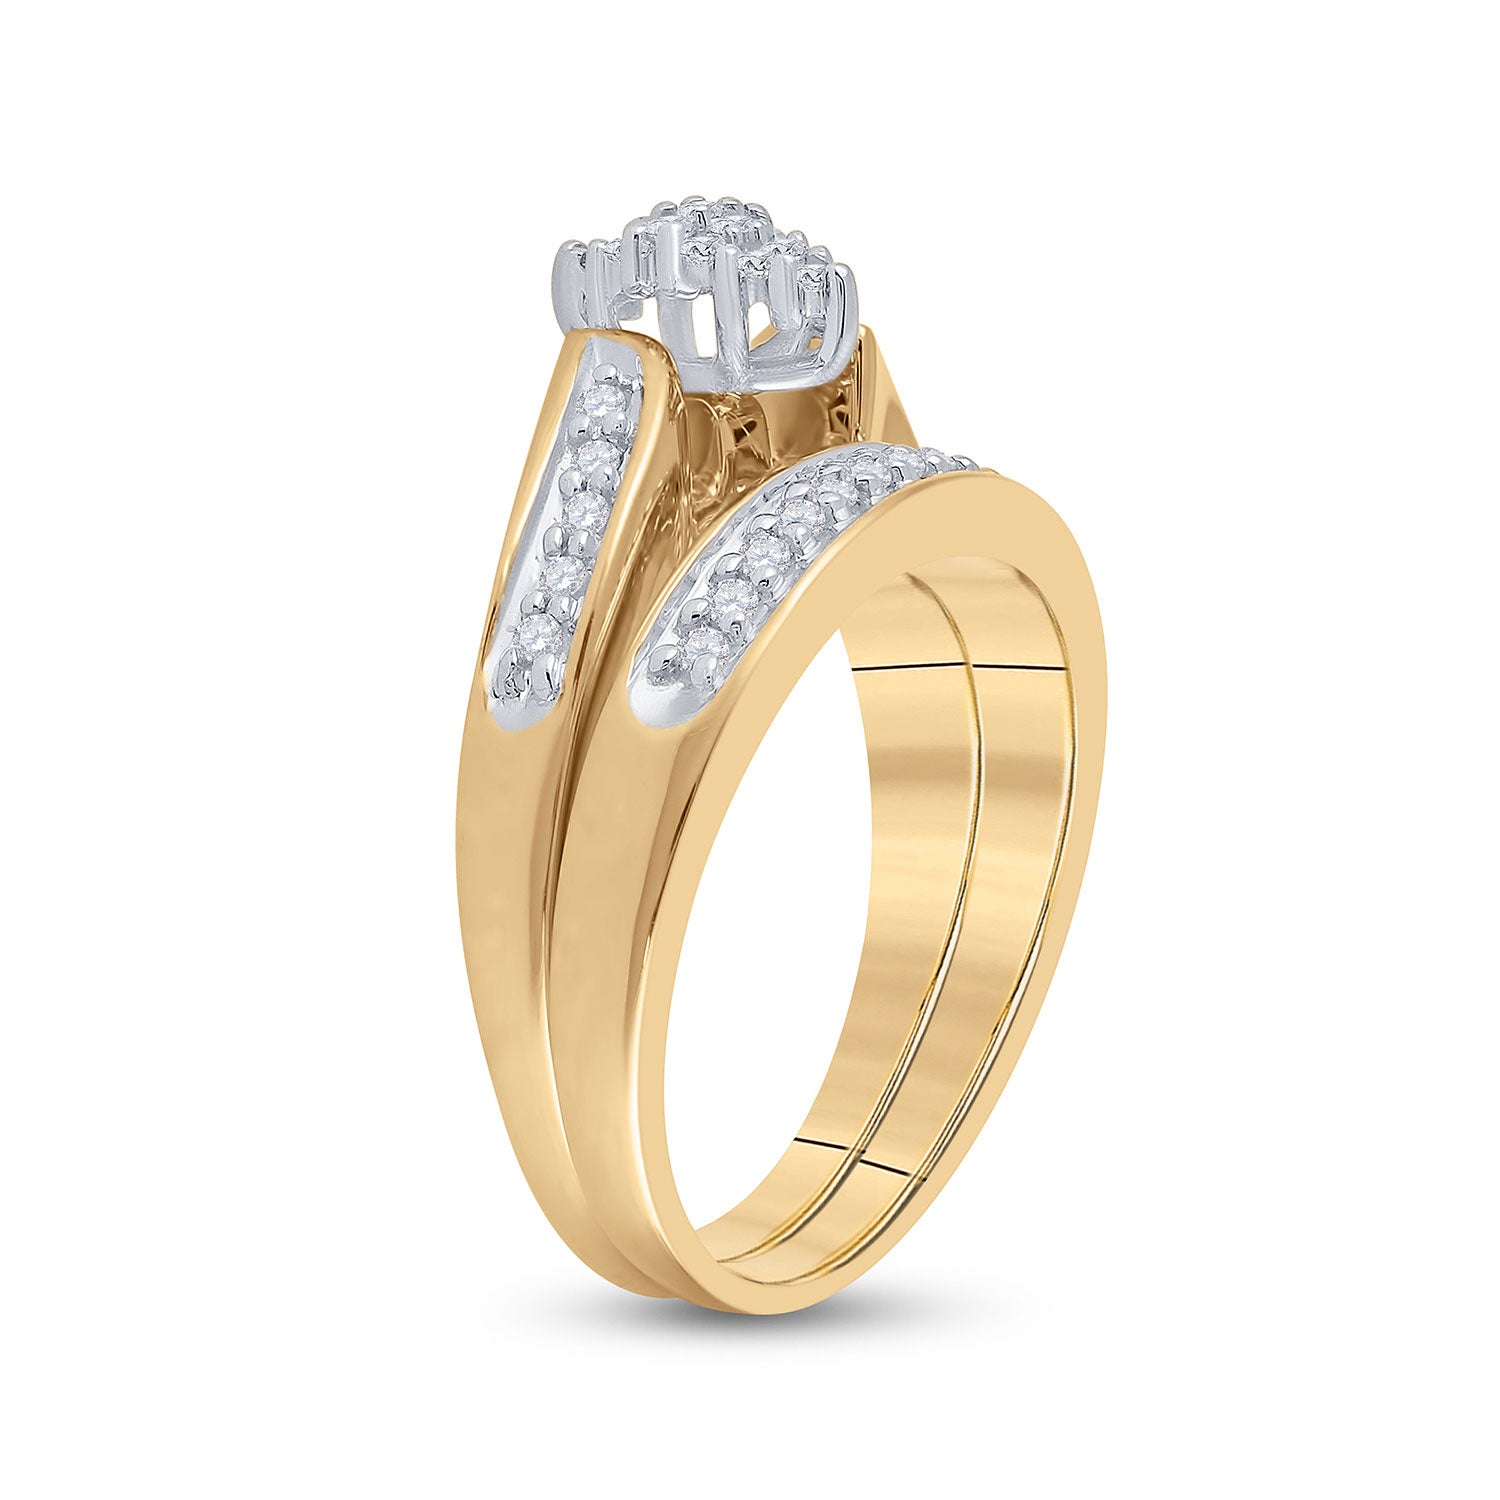 10kt Yellow Gold Round Diamond Bridal Wedding Ring Band Set 1/4 Cttw